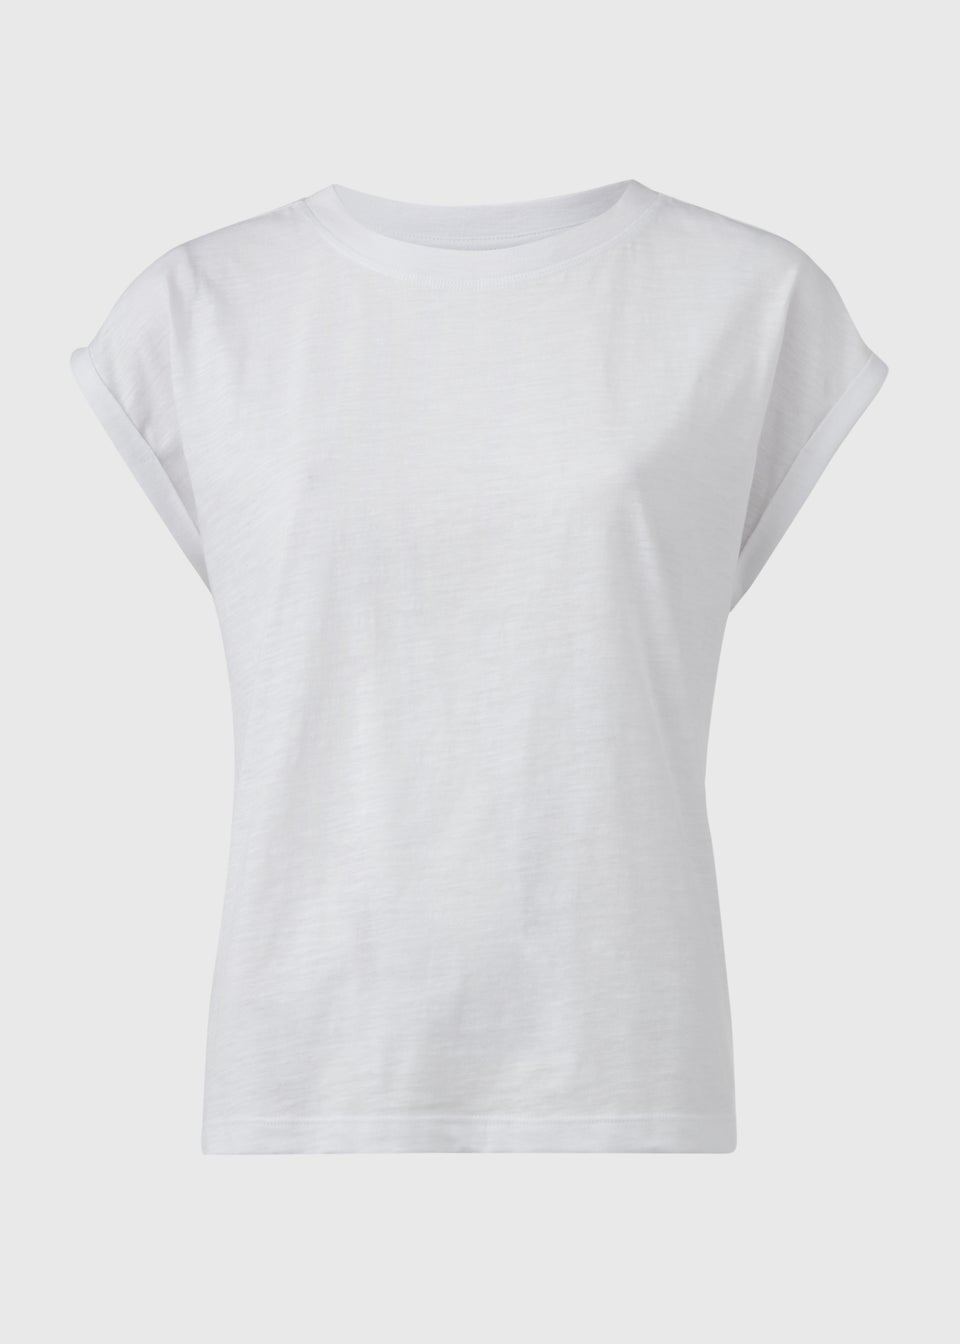 White Relaxed Plain T-Shirt